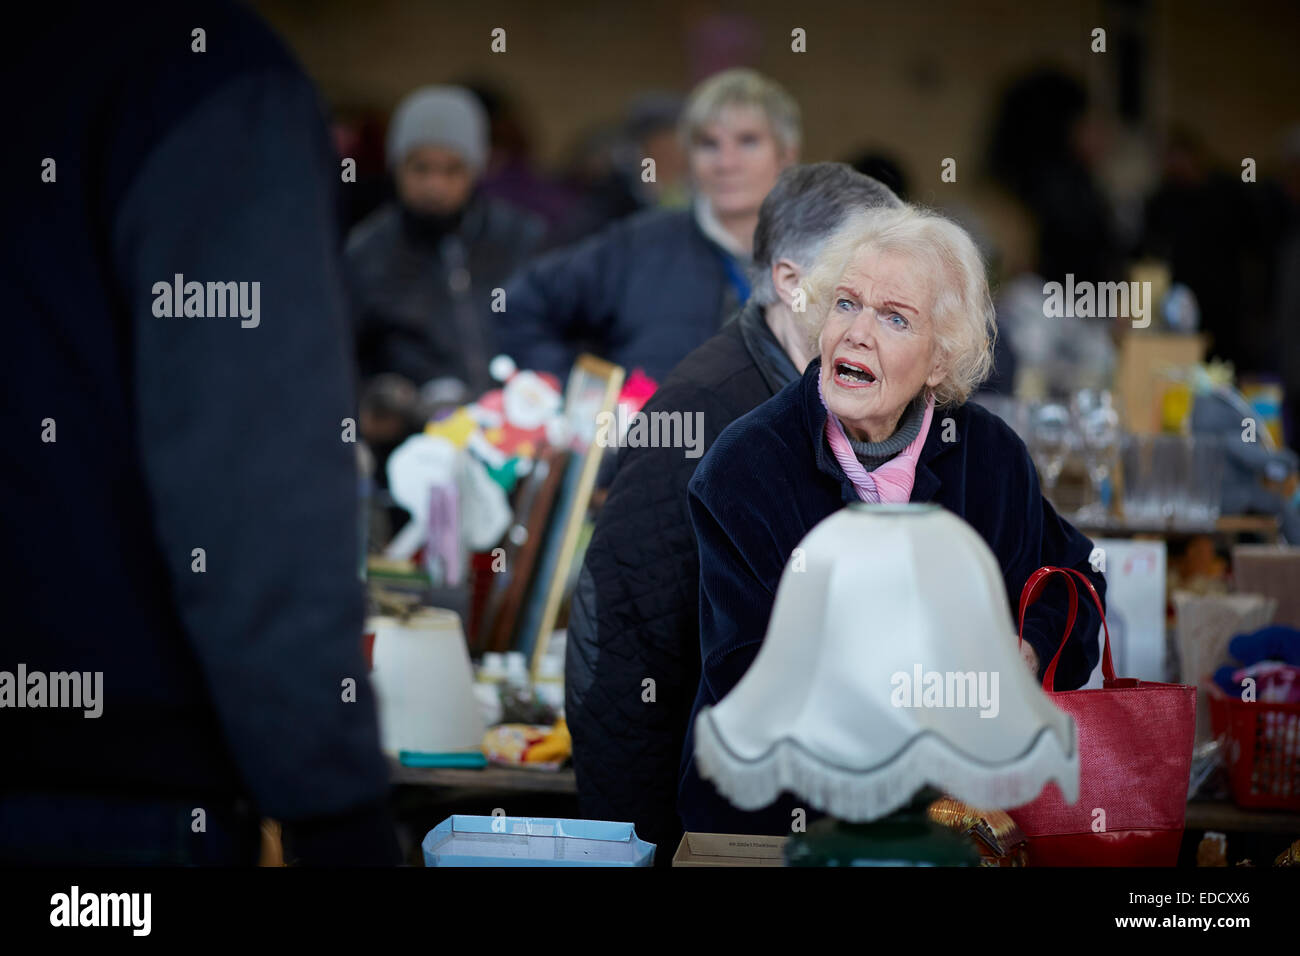 Preston Town Centre in Lancashire, flea market in the centre selling secondhand good on market stalls Stock Photo